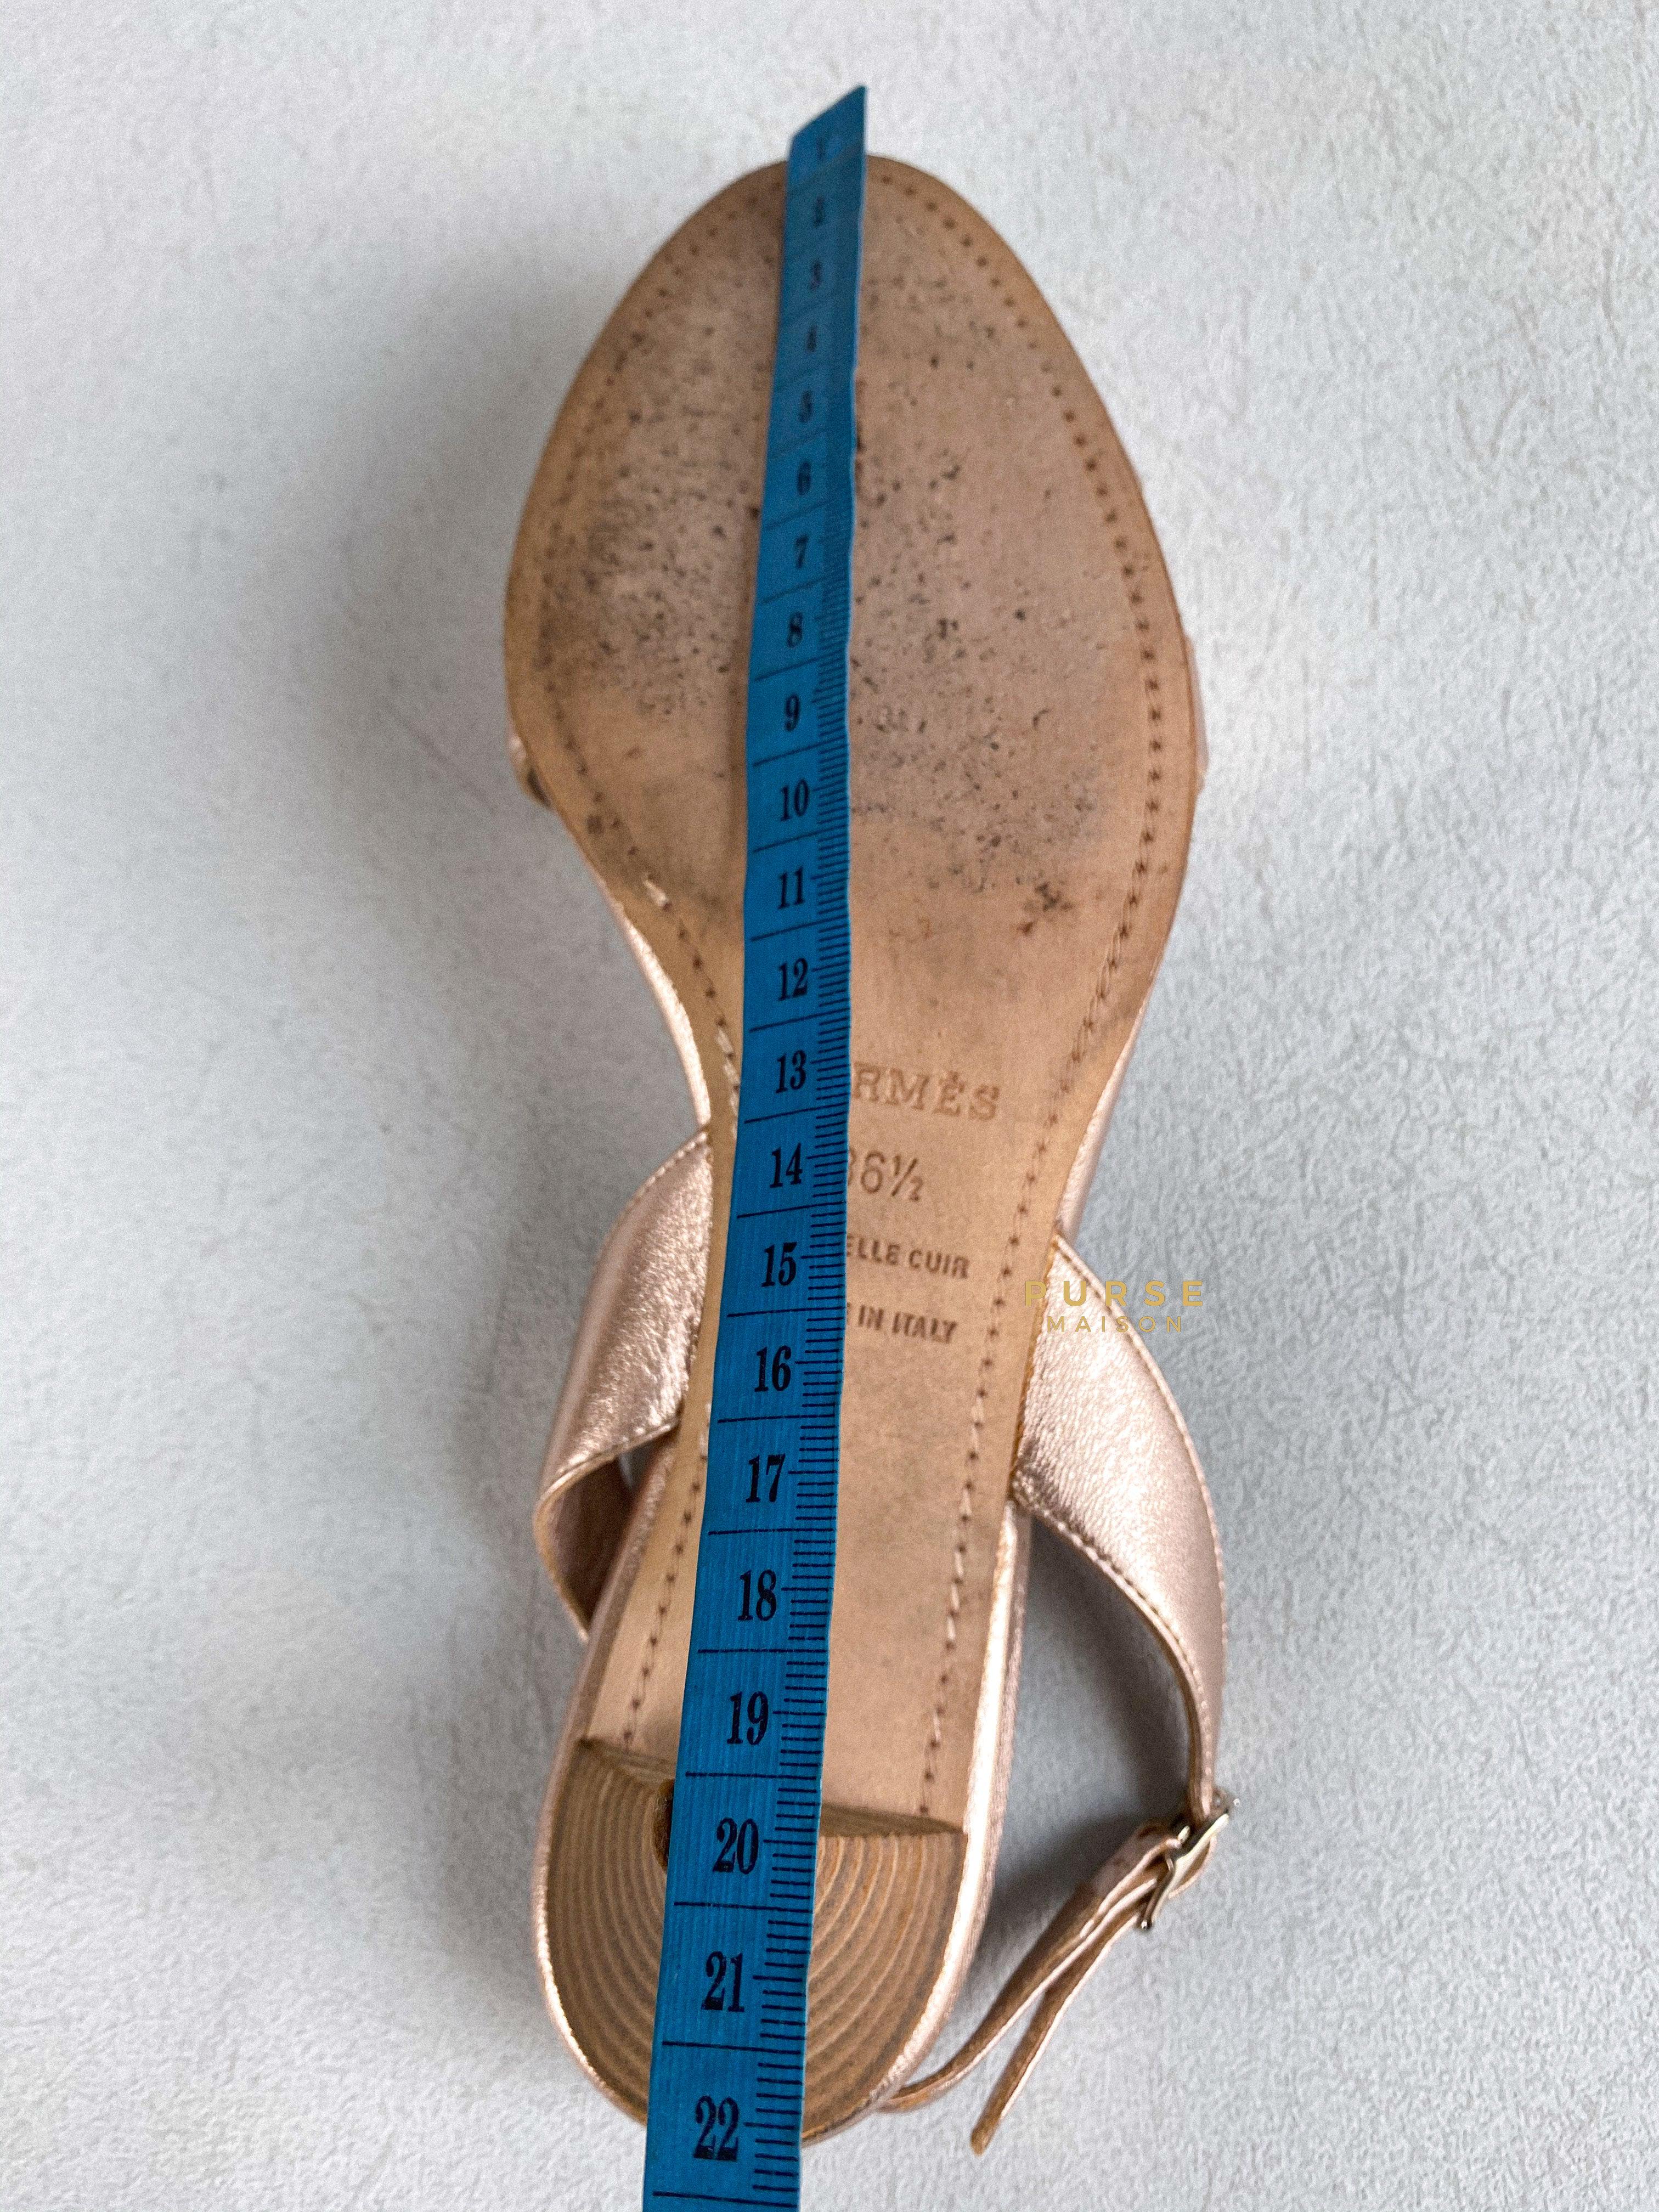 Hermes Metallic Bronze Leather Night 70 Slingback Sandals Size 36.5 EU | Purse Maison Luxury Bags Shop